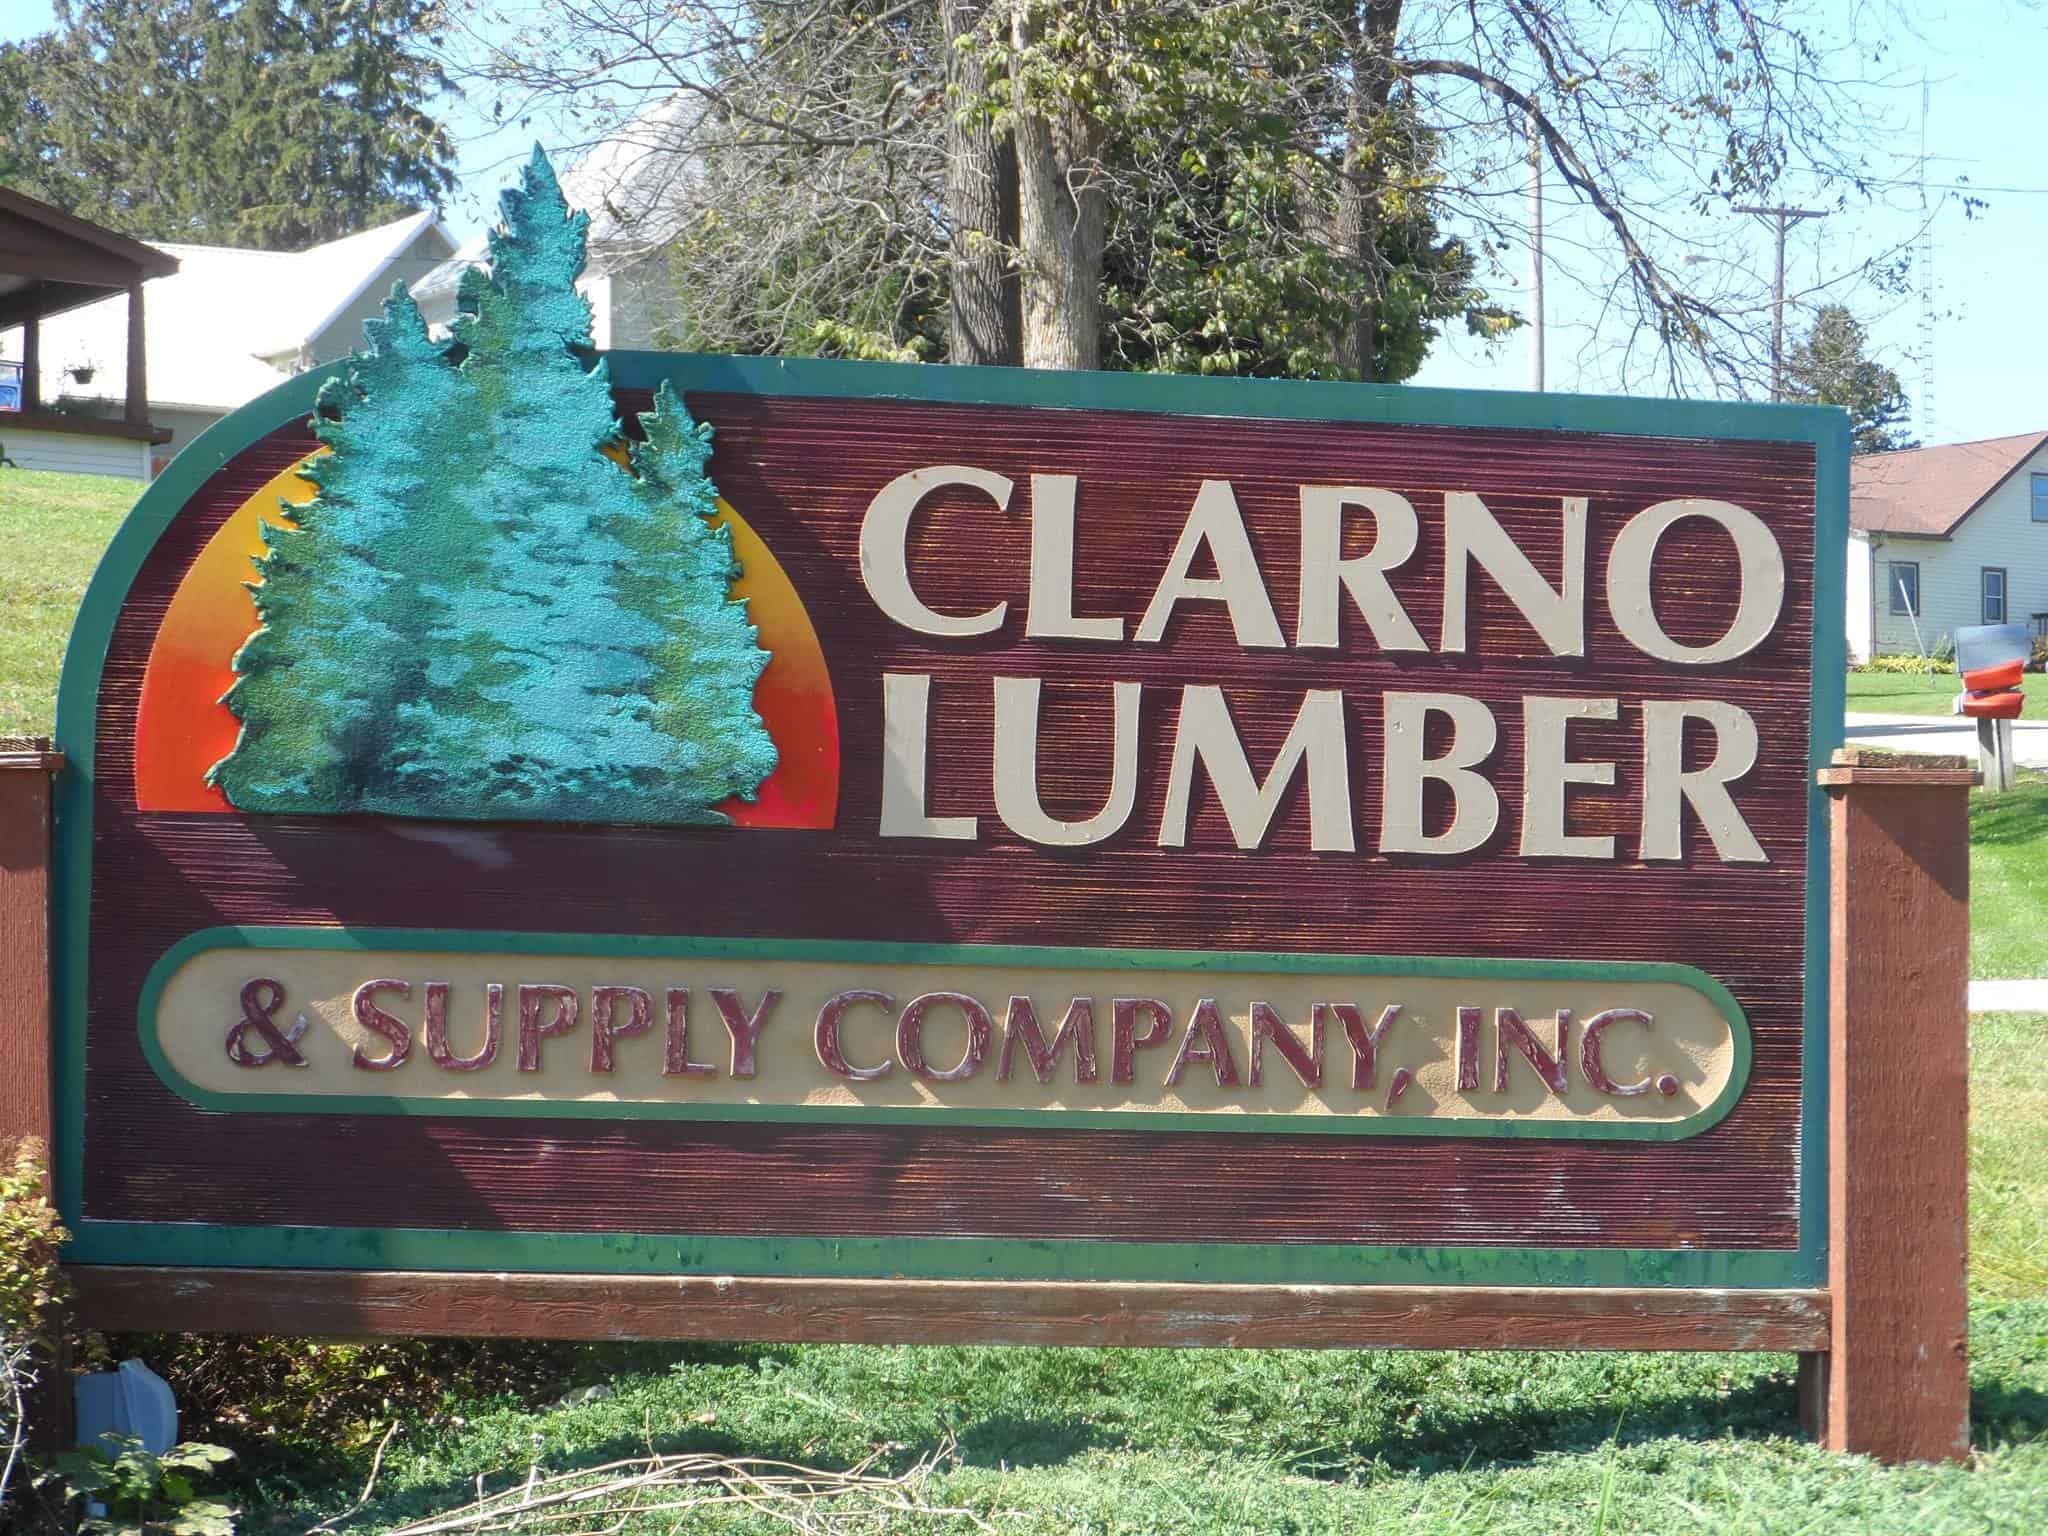 Clarno Lumber & Supply